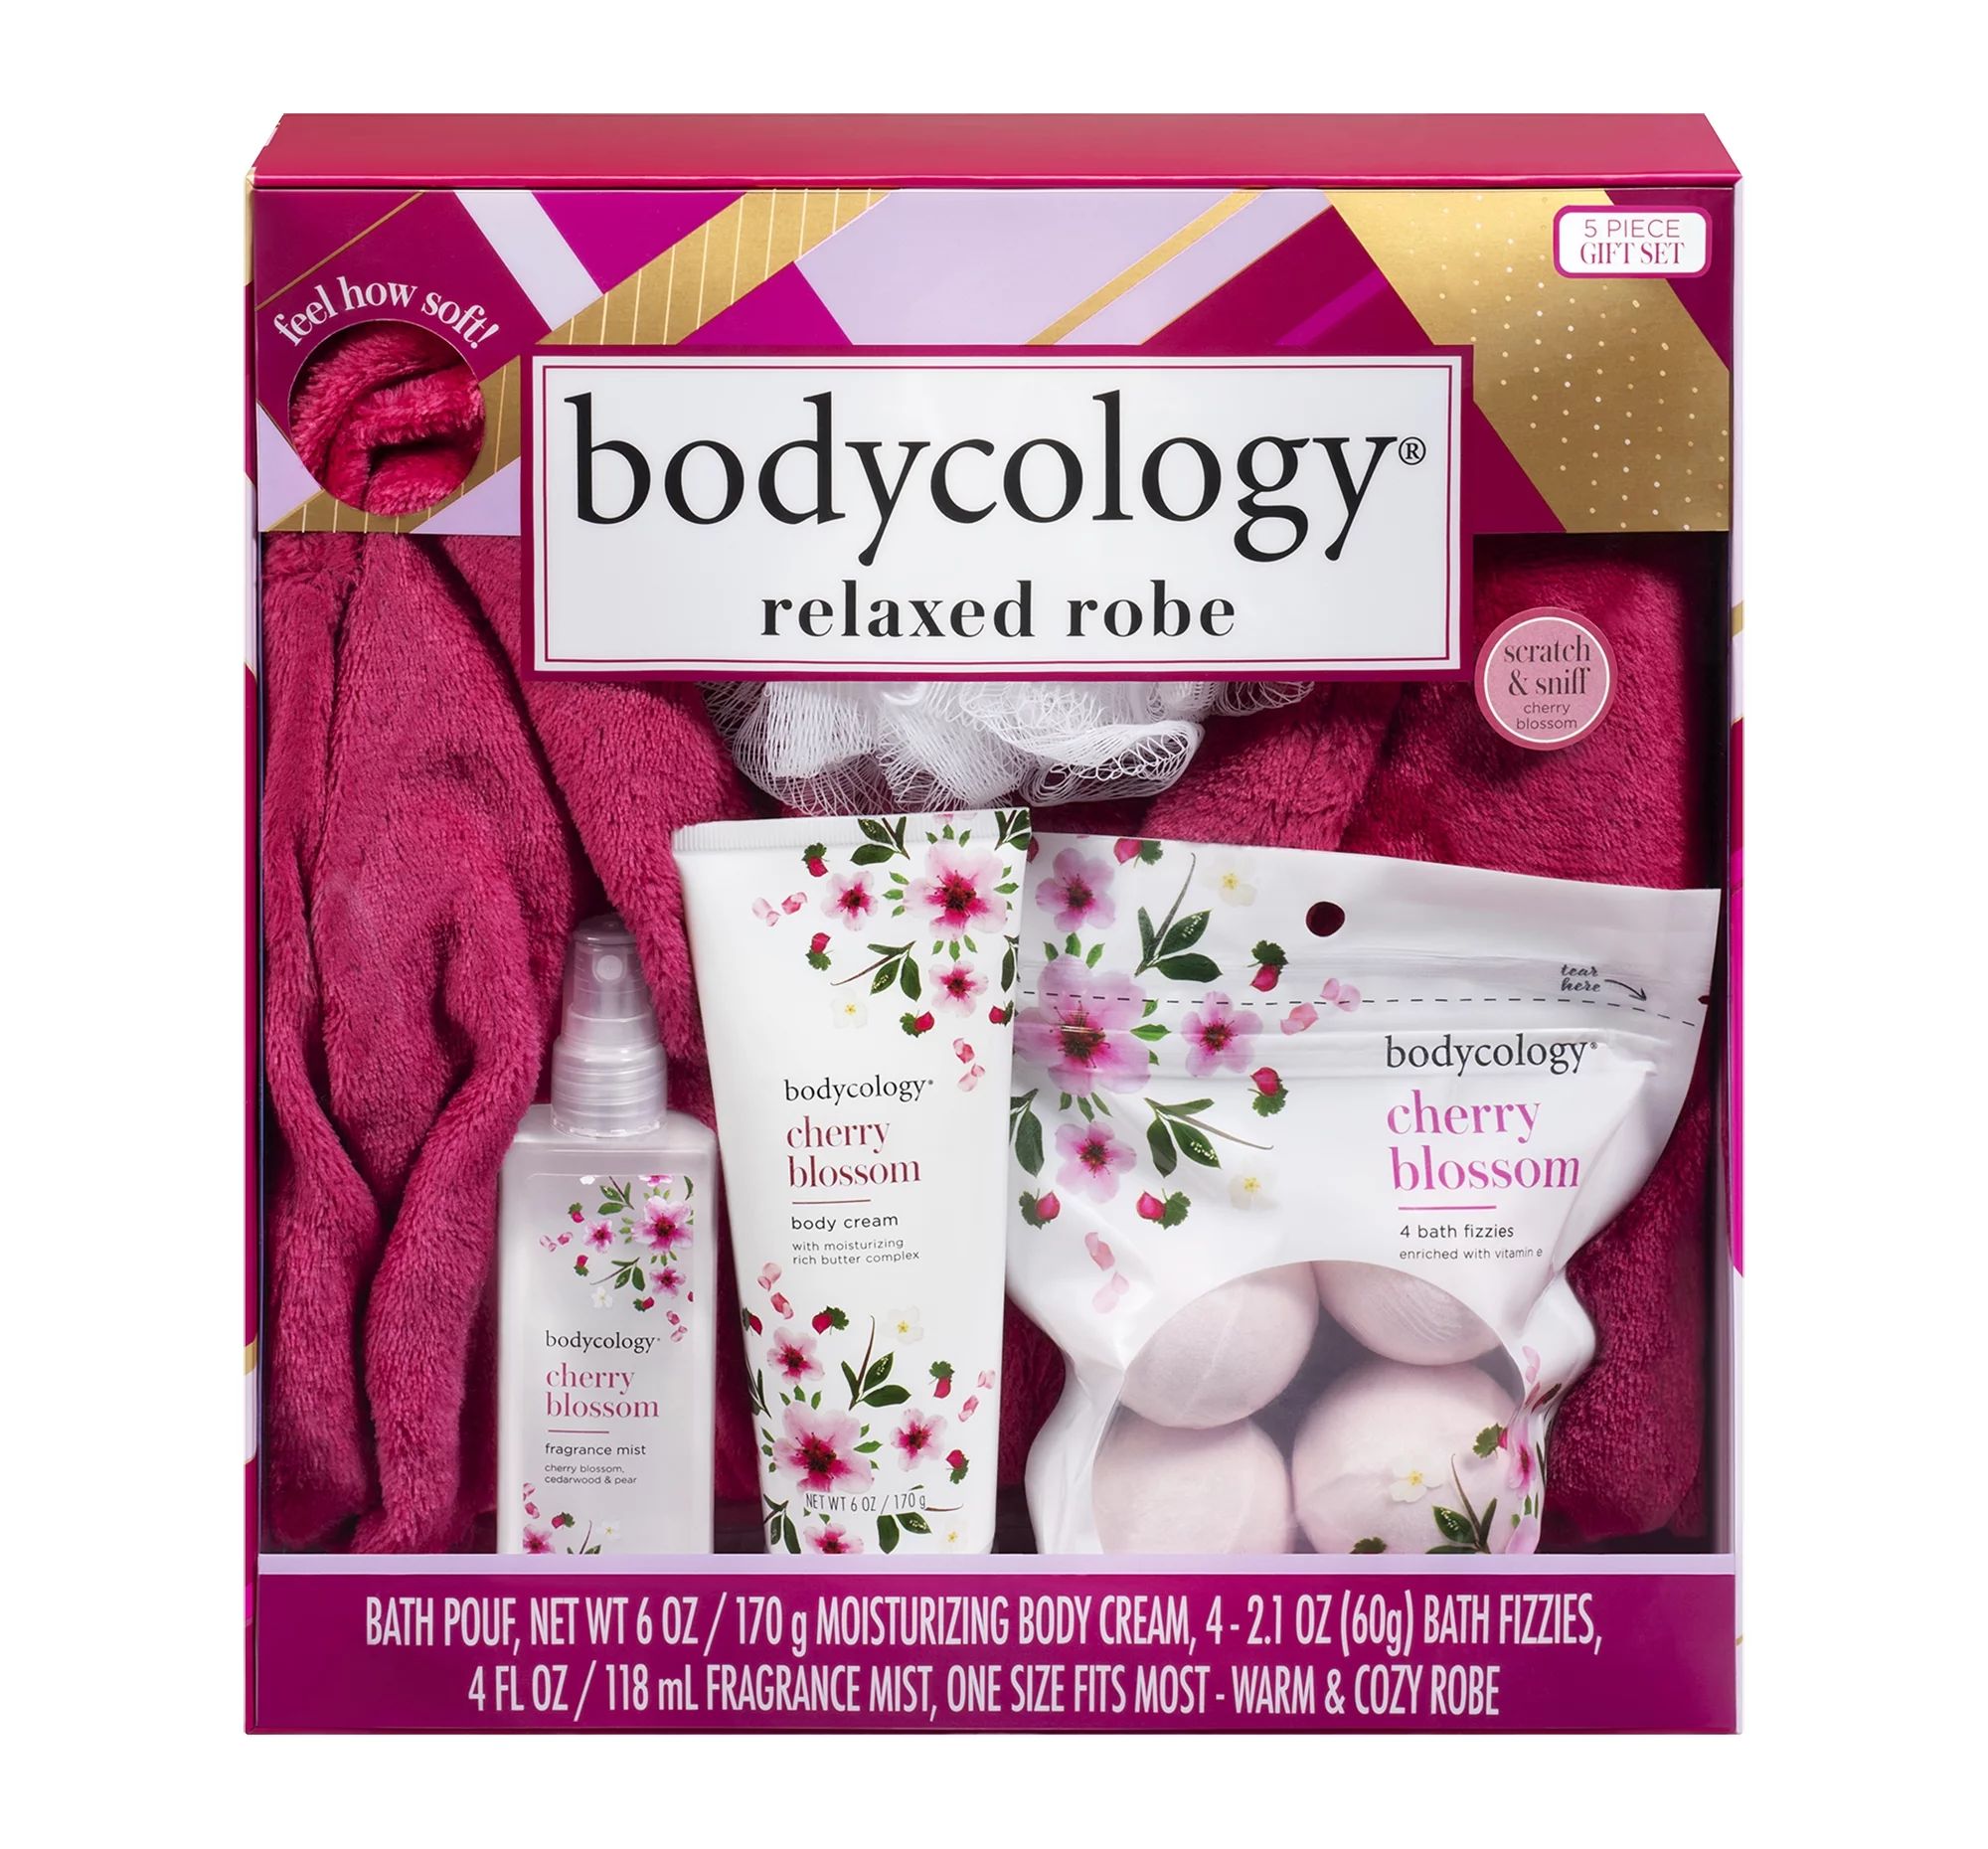 BoBodycology Cherry Blossom Relaxed Robe Bath & Body Gift Set, 5 PC | Walmart (US)